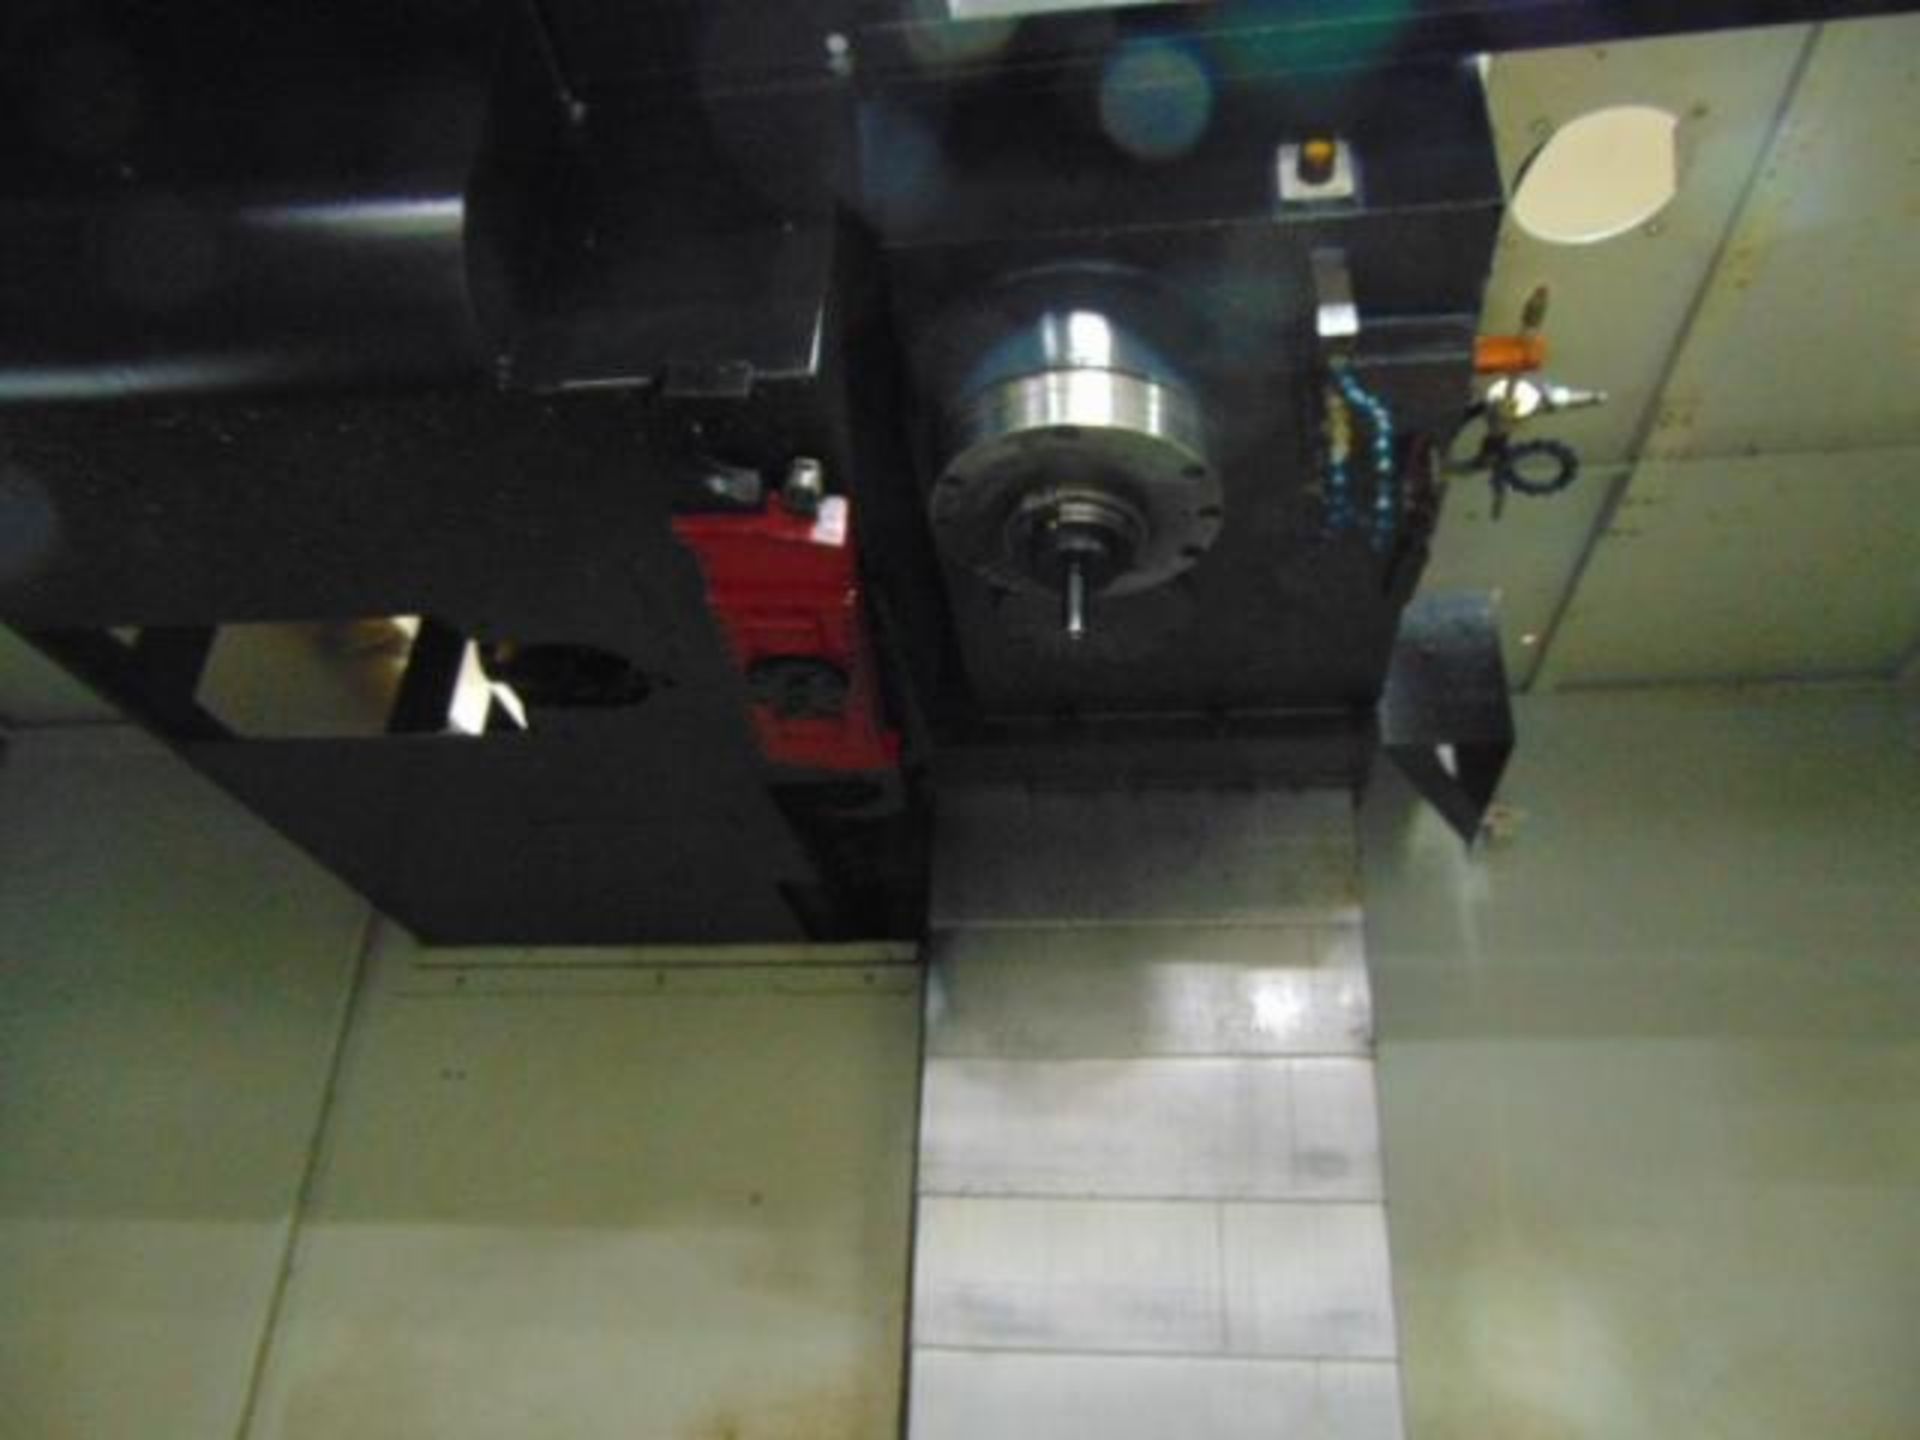 4-AXIS VERTICAL MACHINING CENTER, DOOSAN MDL. MYNX 7500/50, new 4/2012, Fanuc 31i CNC, 29.5" x 63" t - Image 4 of 21